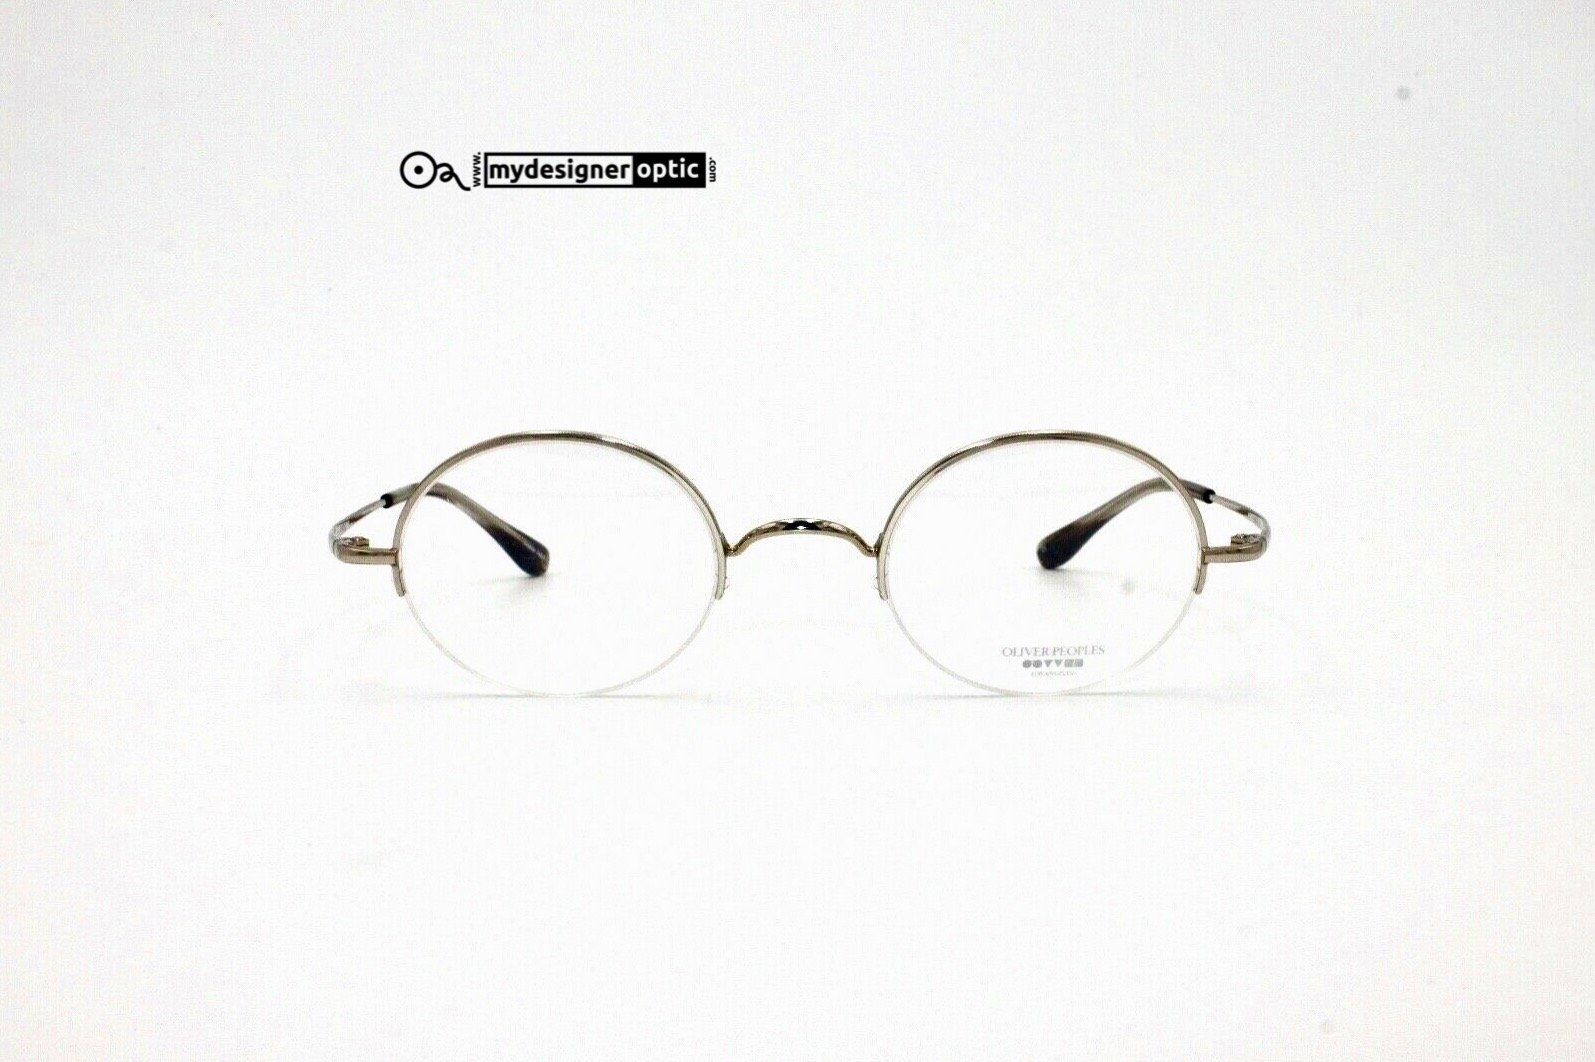 Oliver Peoples Eyewear Frames Winslow S 44-23 135 Made in Japan